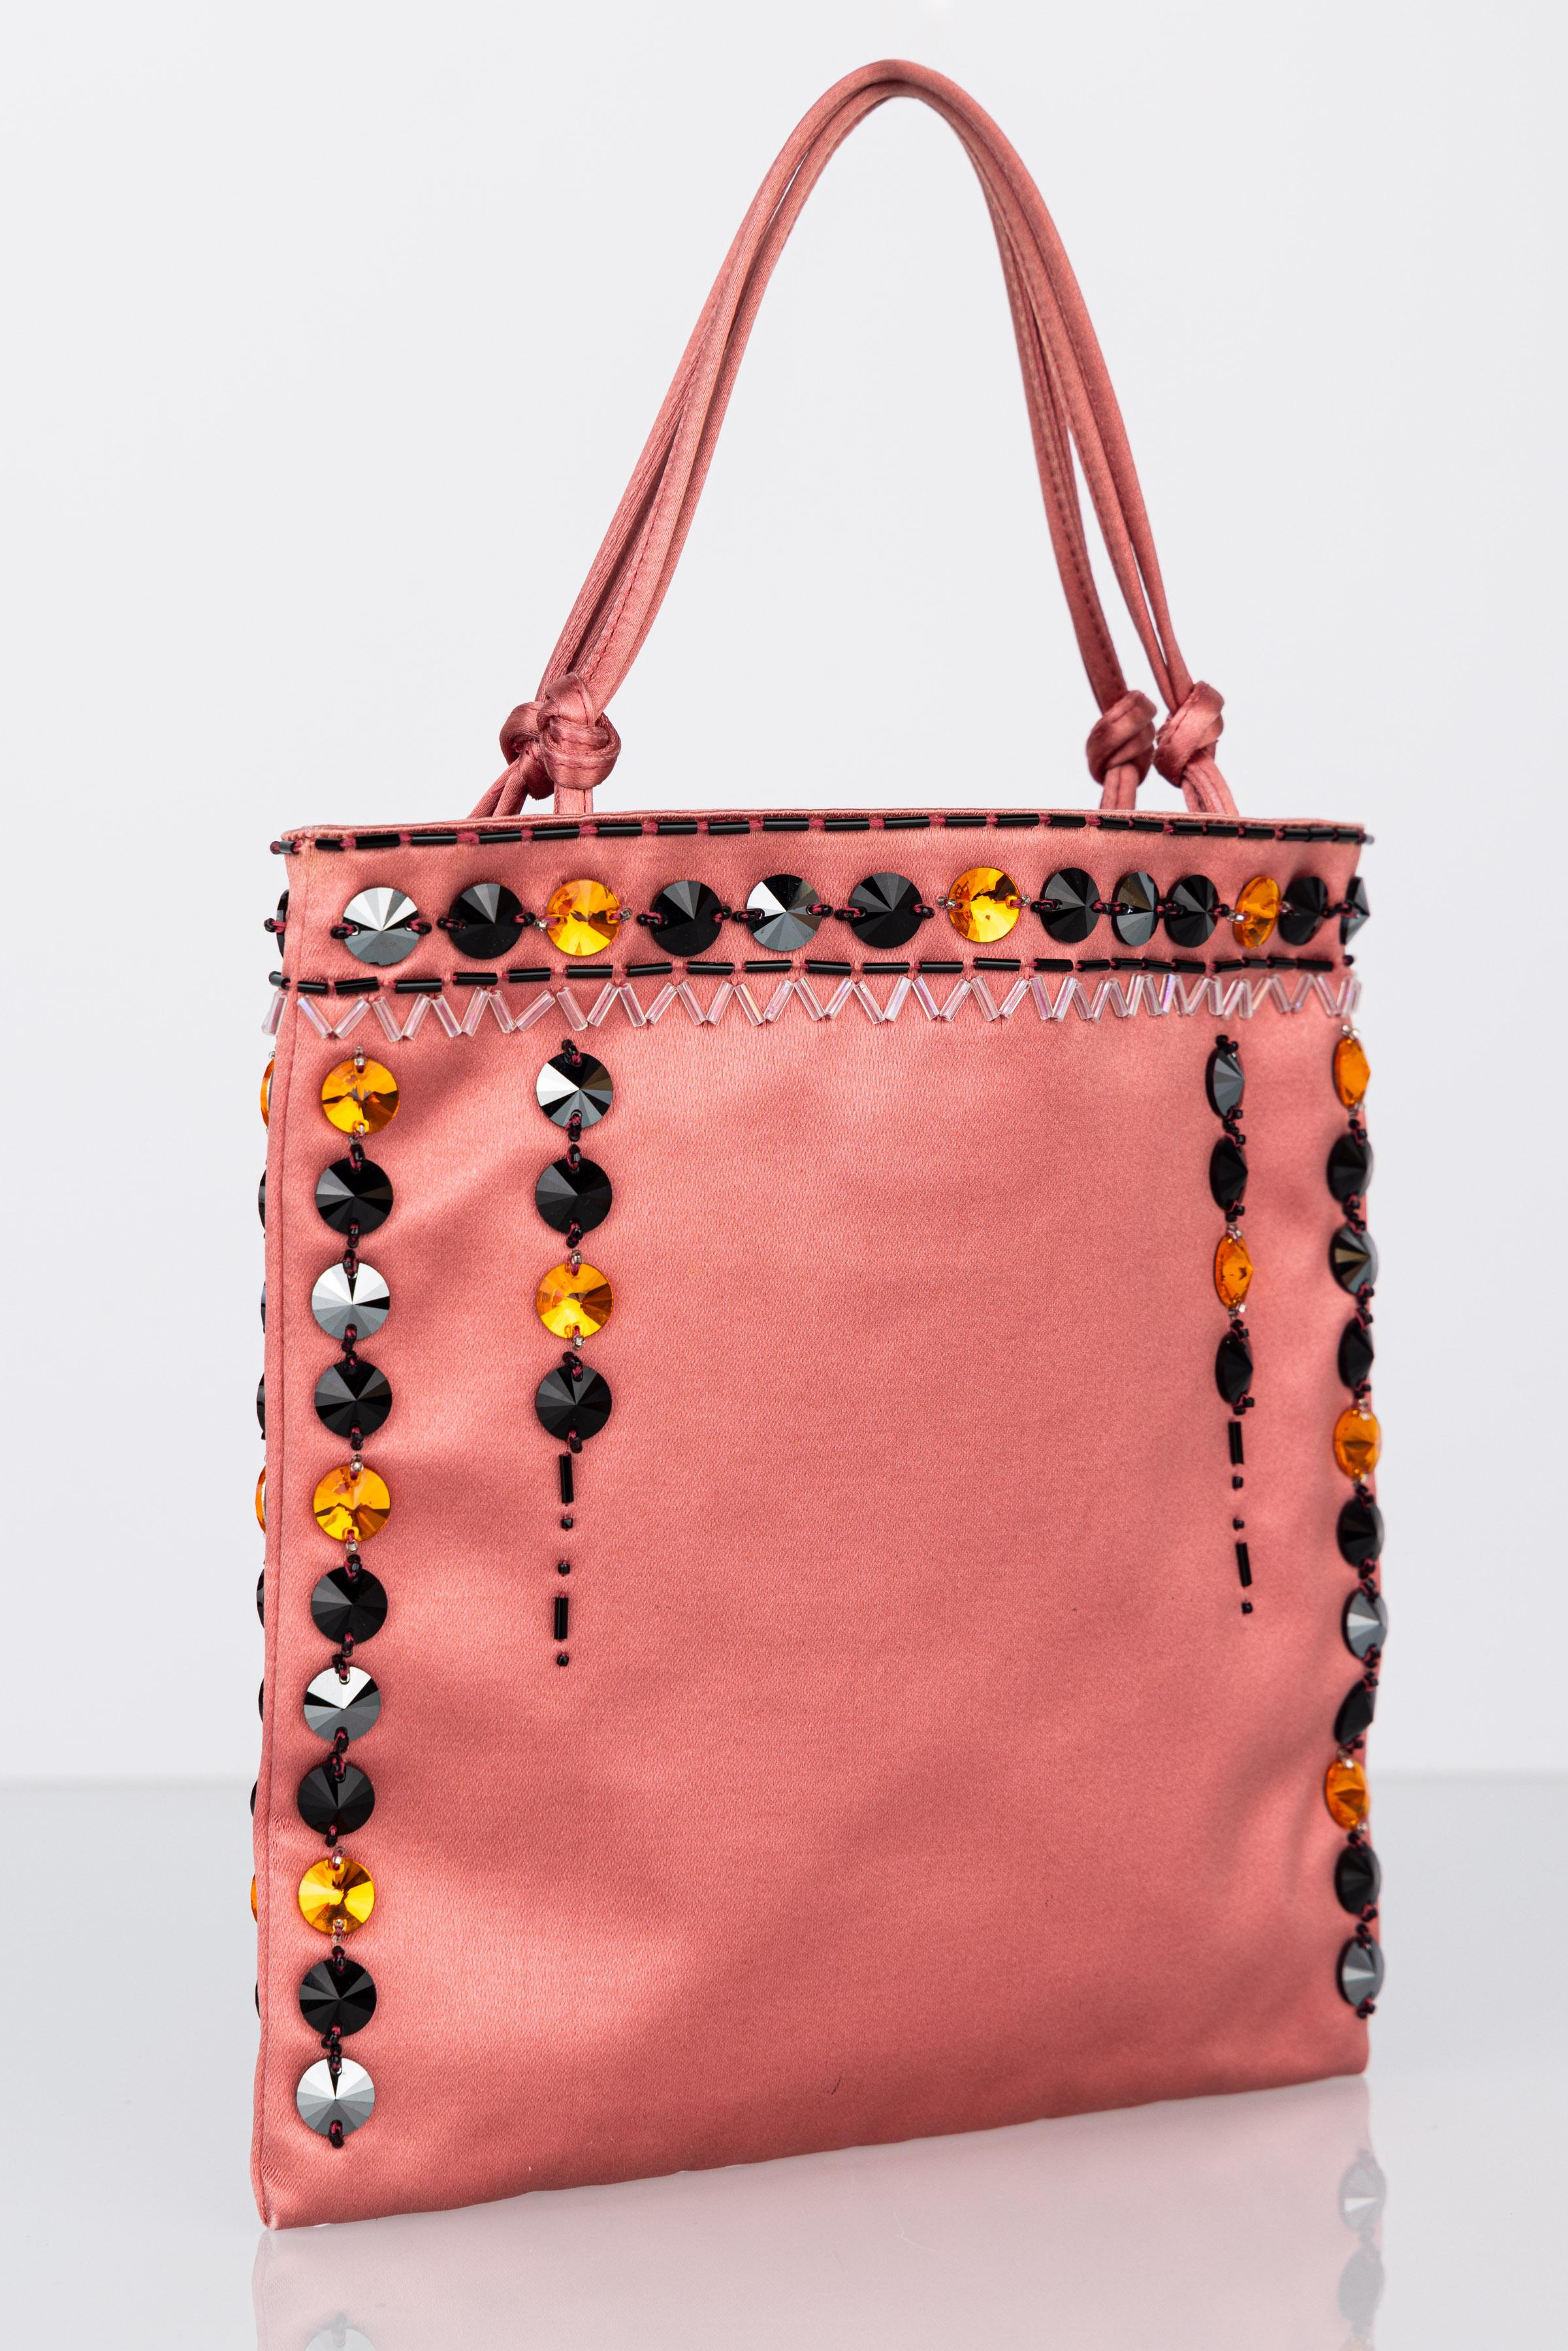 Prada Pink Silk Jewel Beaded Bag In Good Condition For Sale In Boca Raton, FL